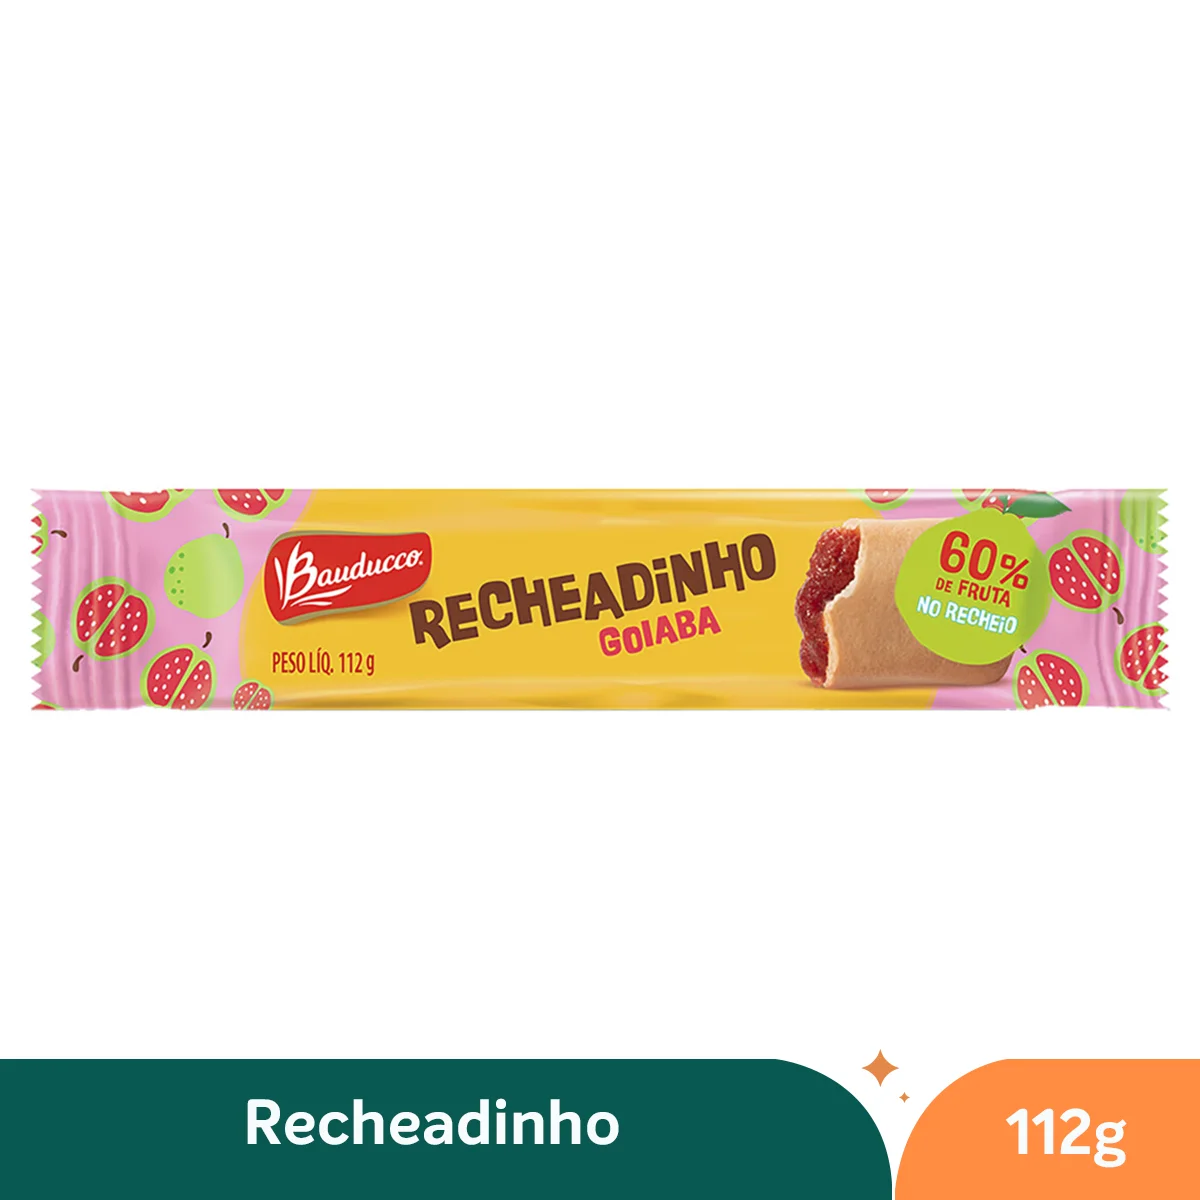 Bauducco Recheadinho Goiabinha 104g – Casa Brasileira GmbH